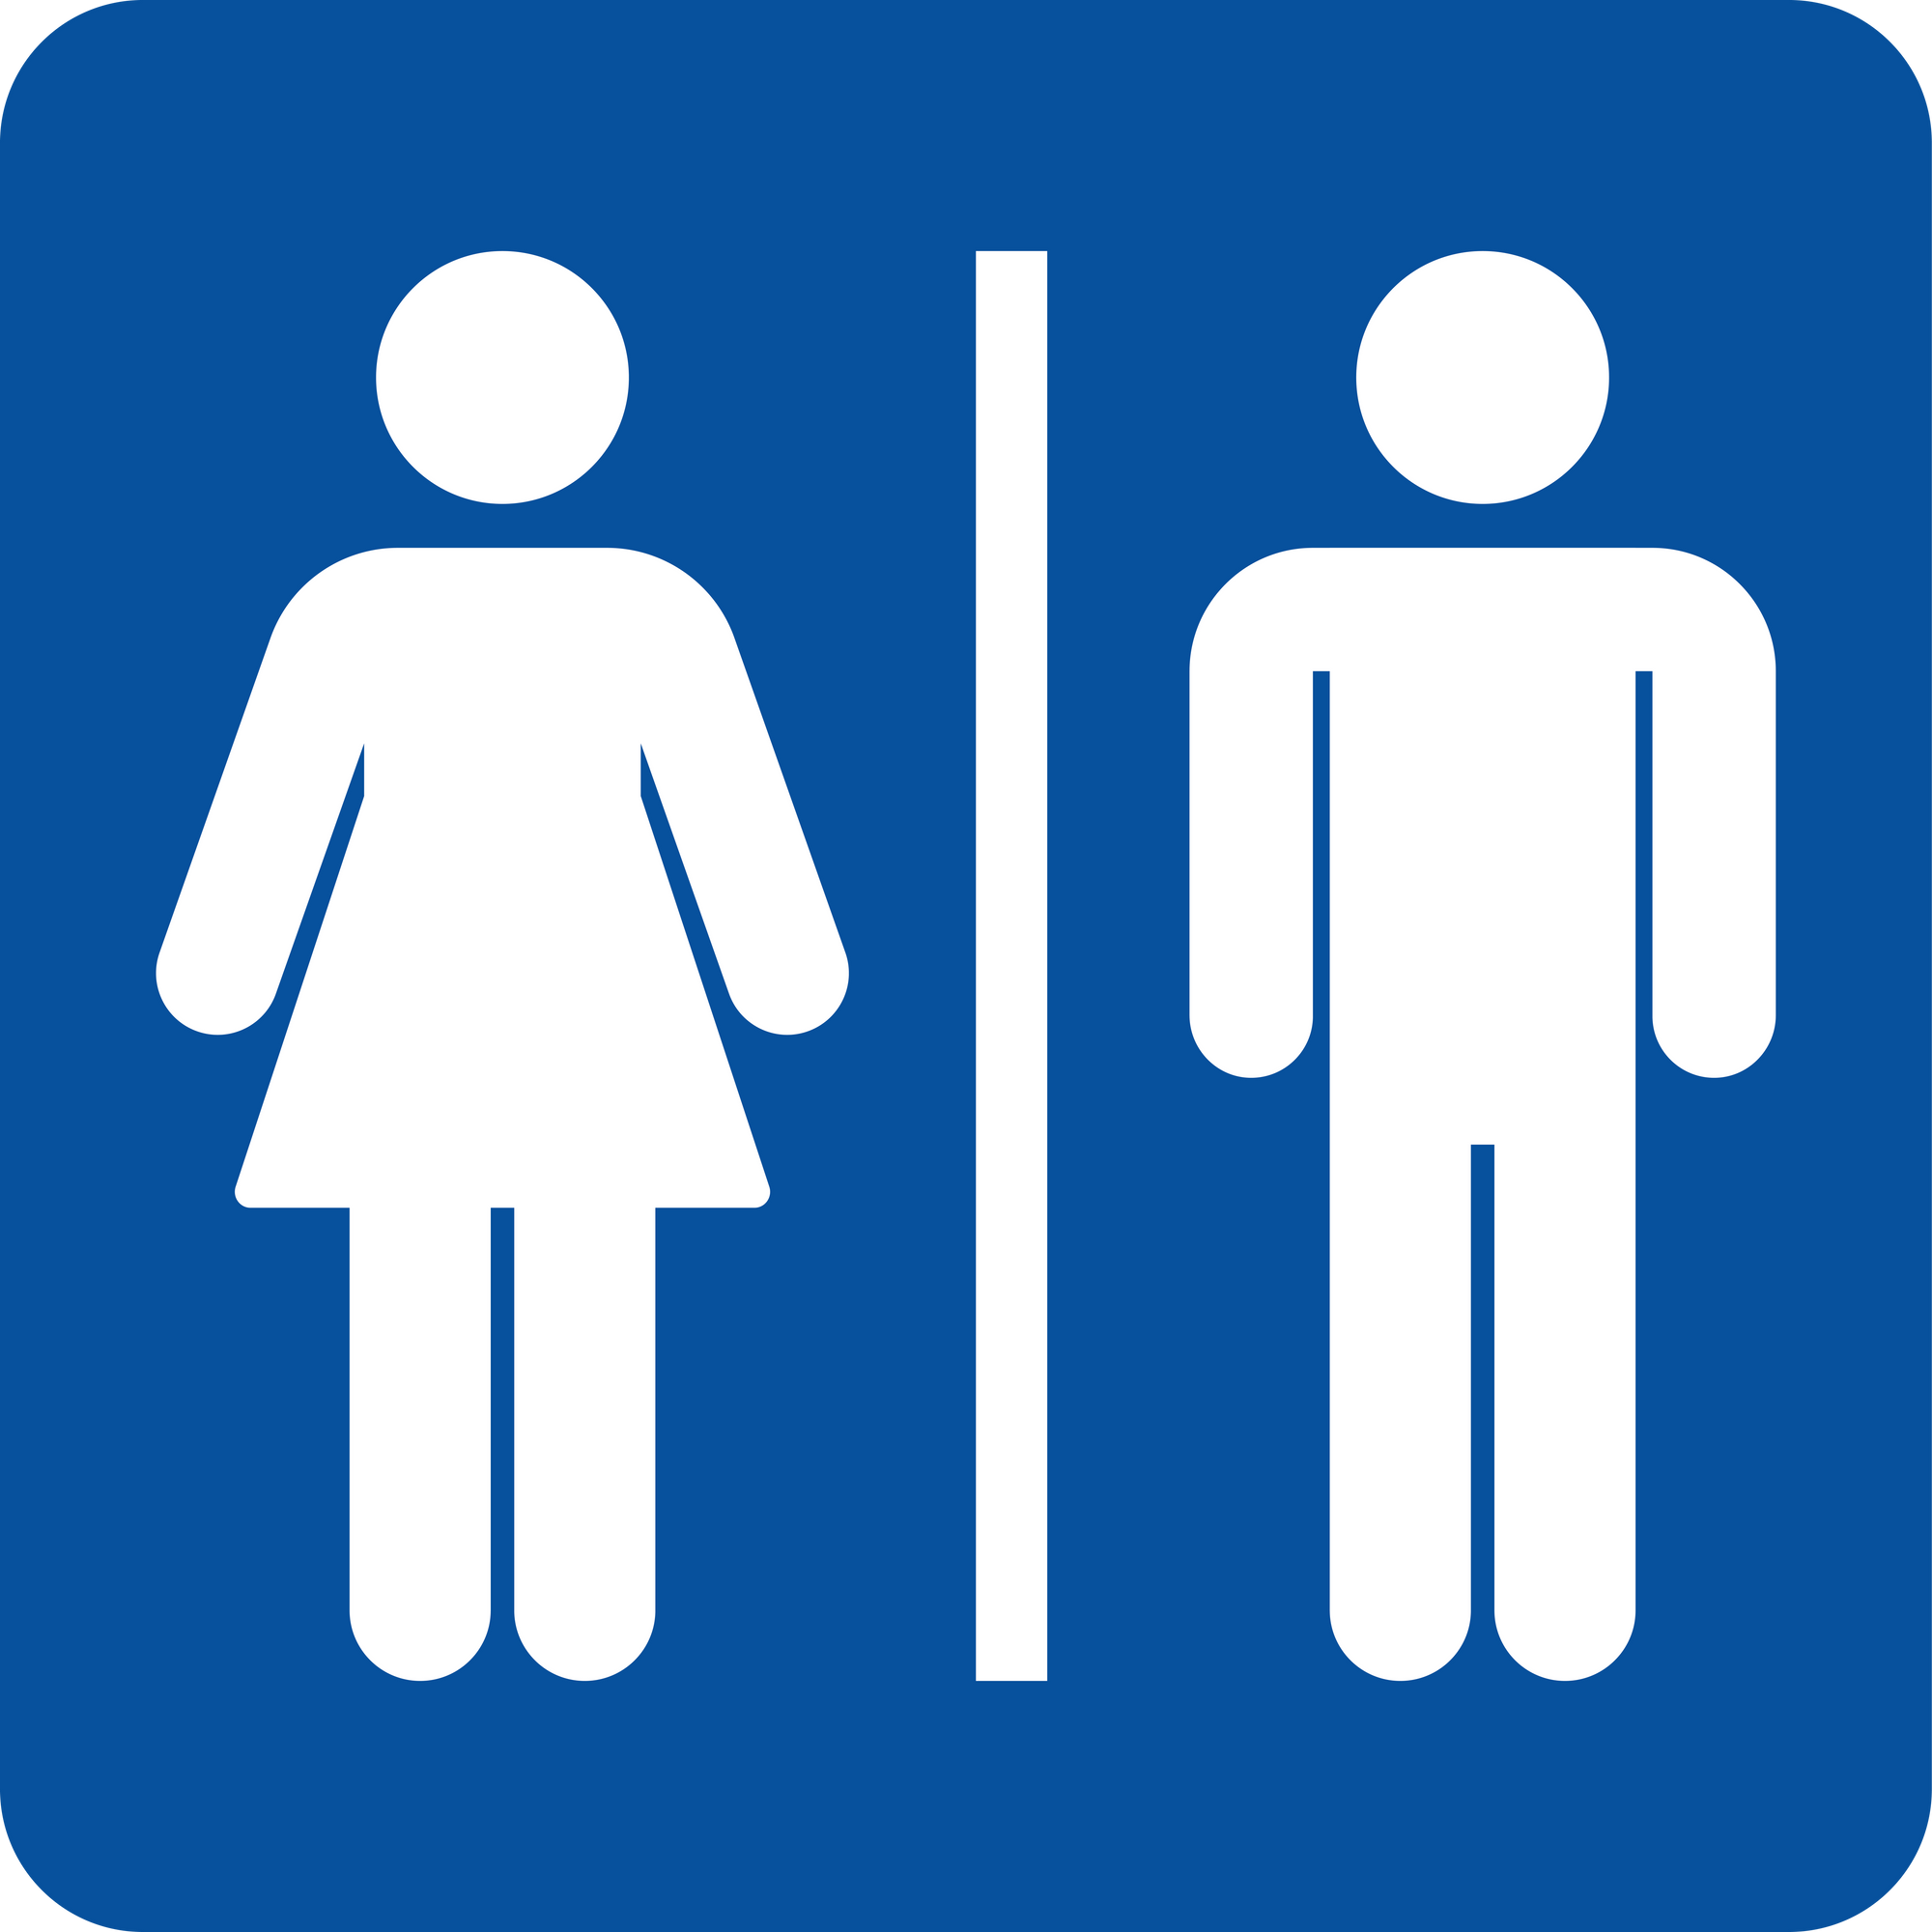 toilet sign, bathroom or restroom icon, washroom label